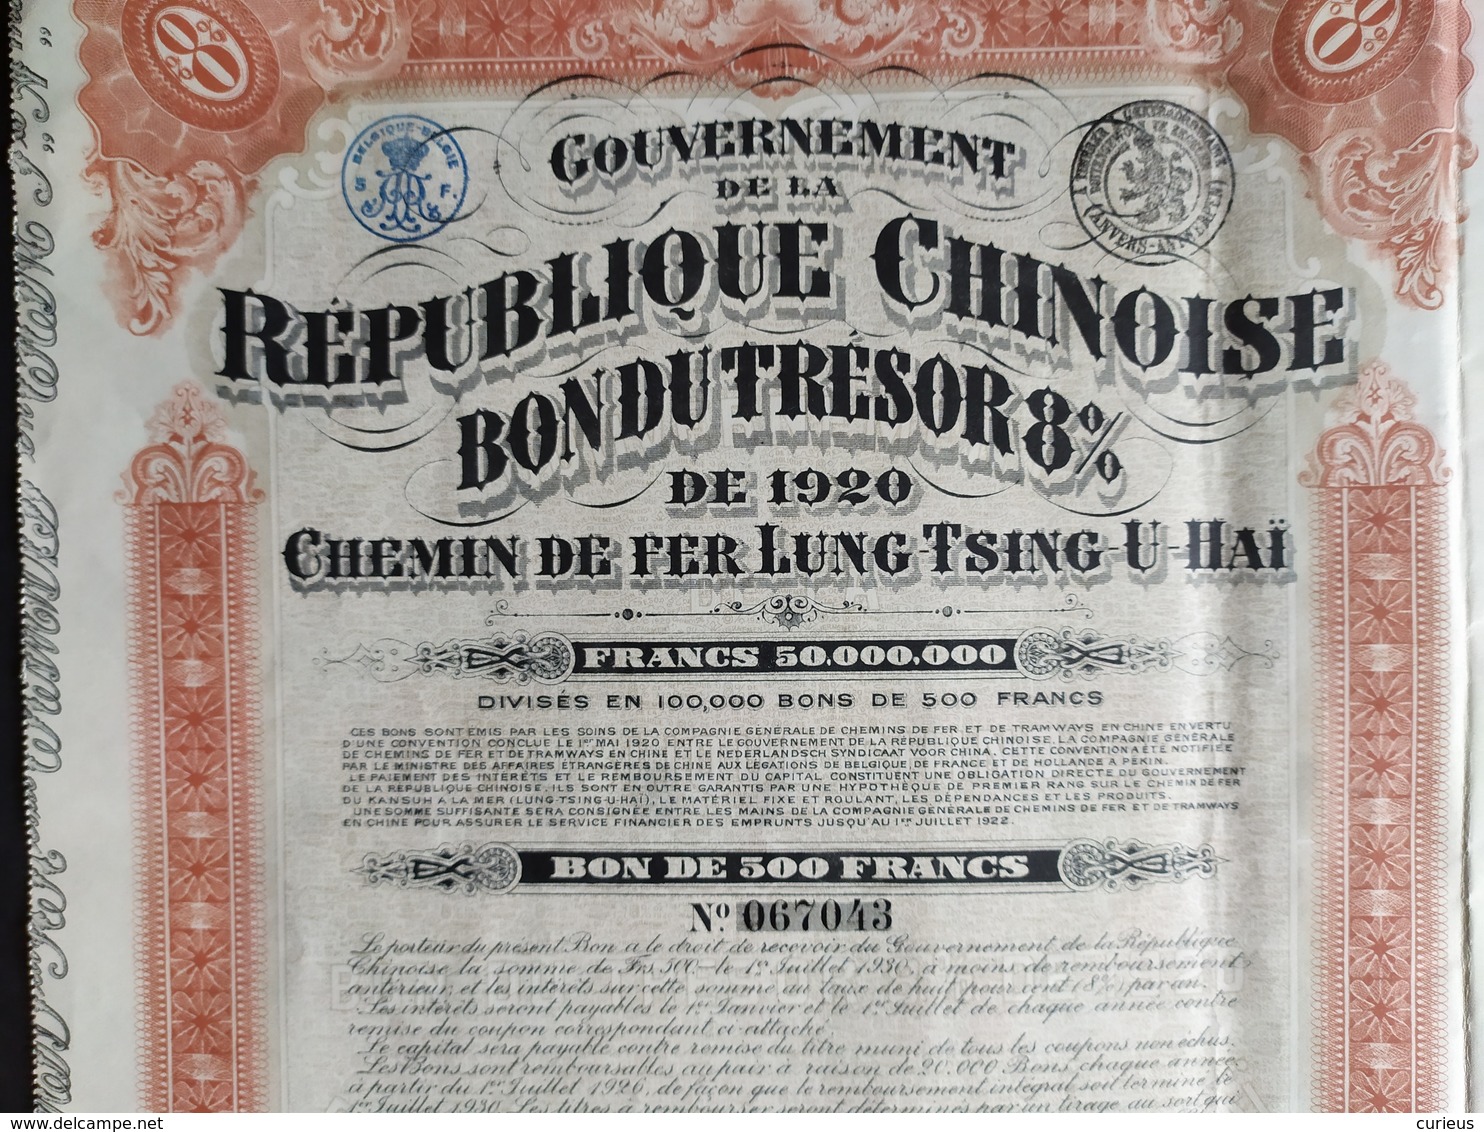 REPUBLIQUE CHINOISE * CHEMIN DE FER LUNG TSING U HAI * BON DU TRESOR 8 % * 1920 * VOIR SCANS - Railway & Tramway